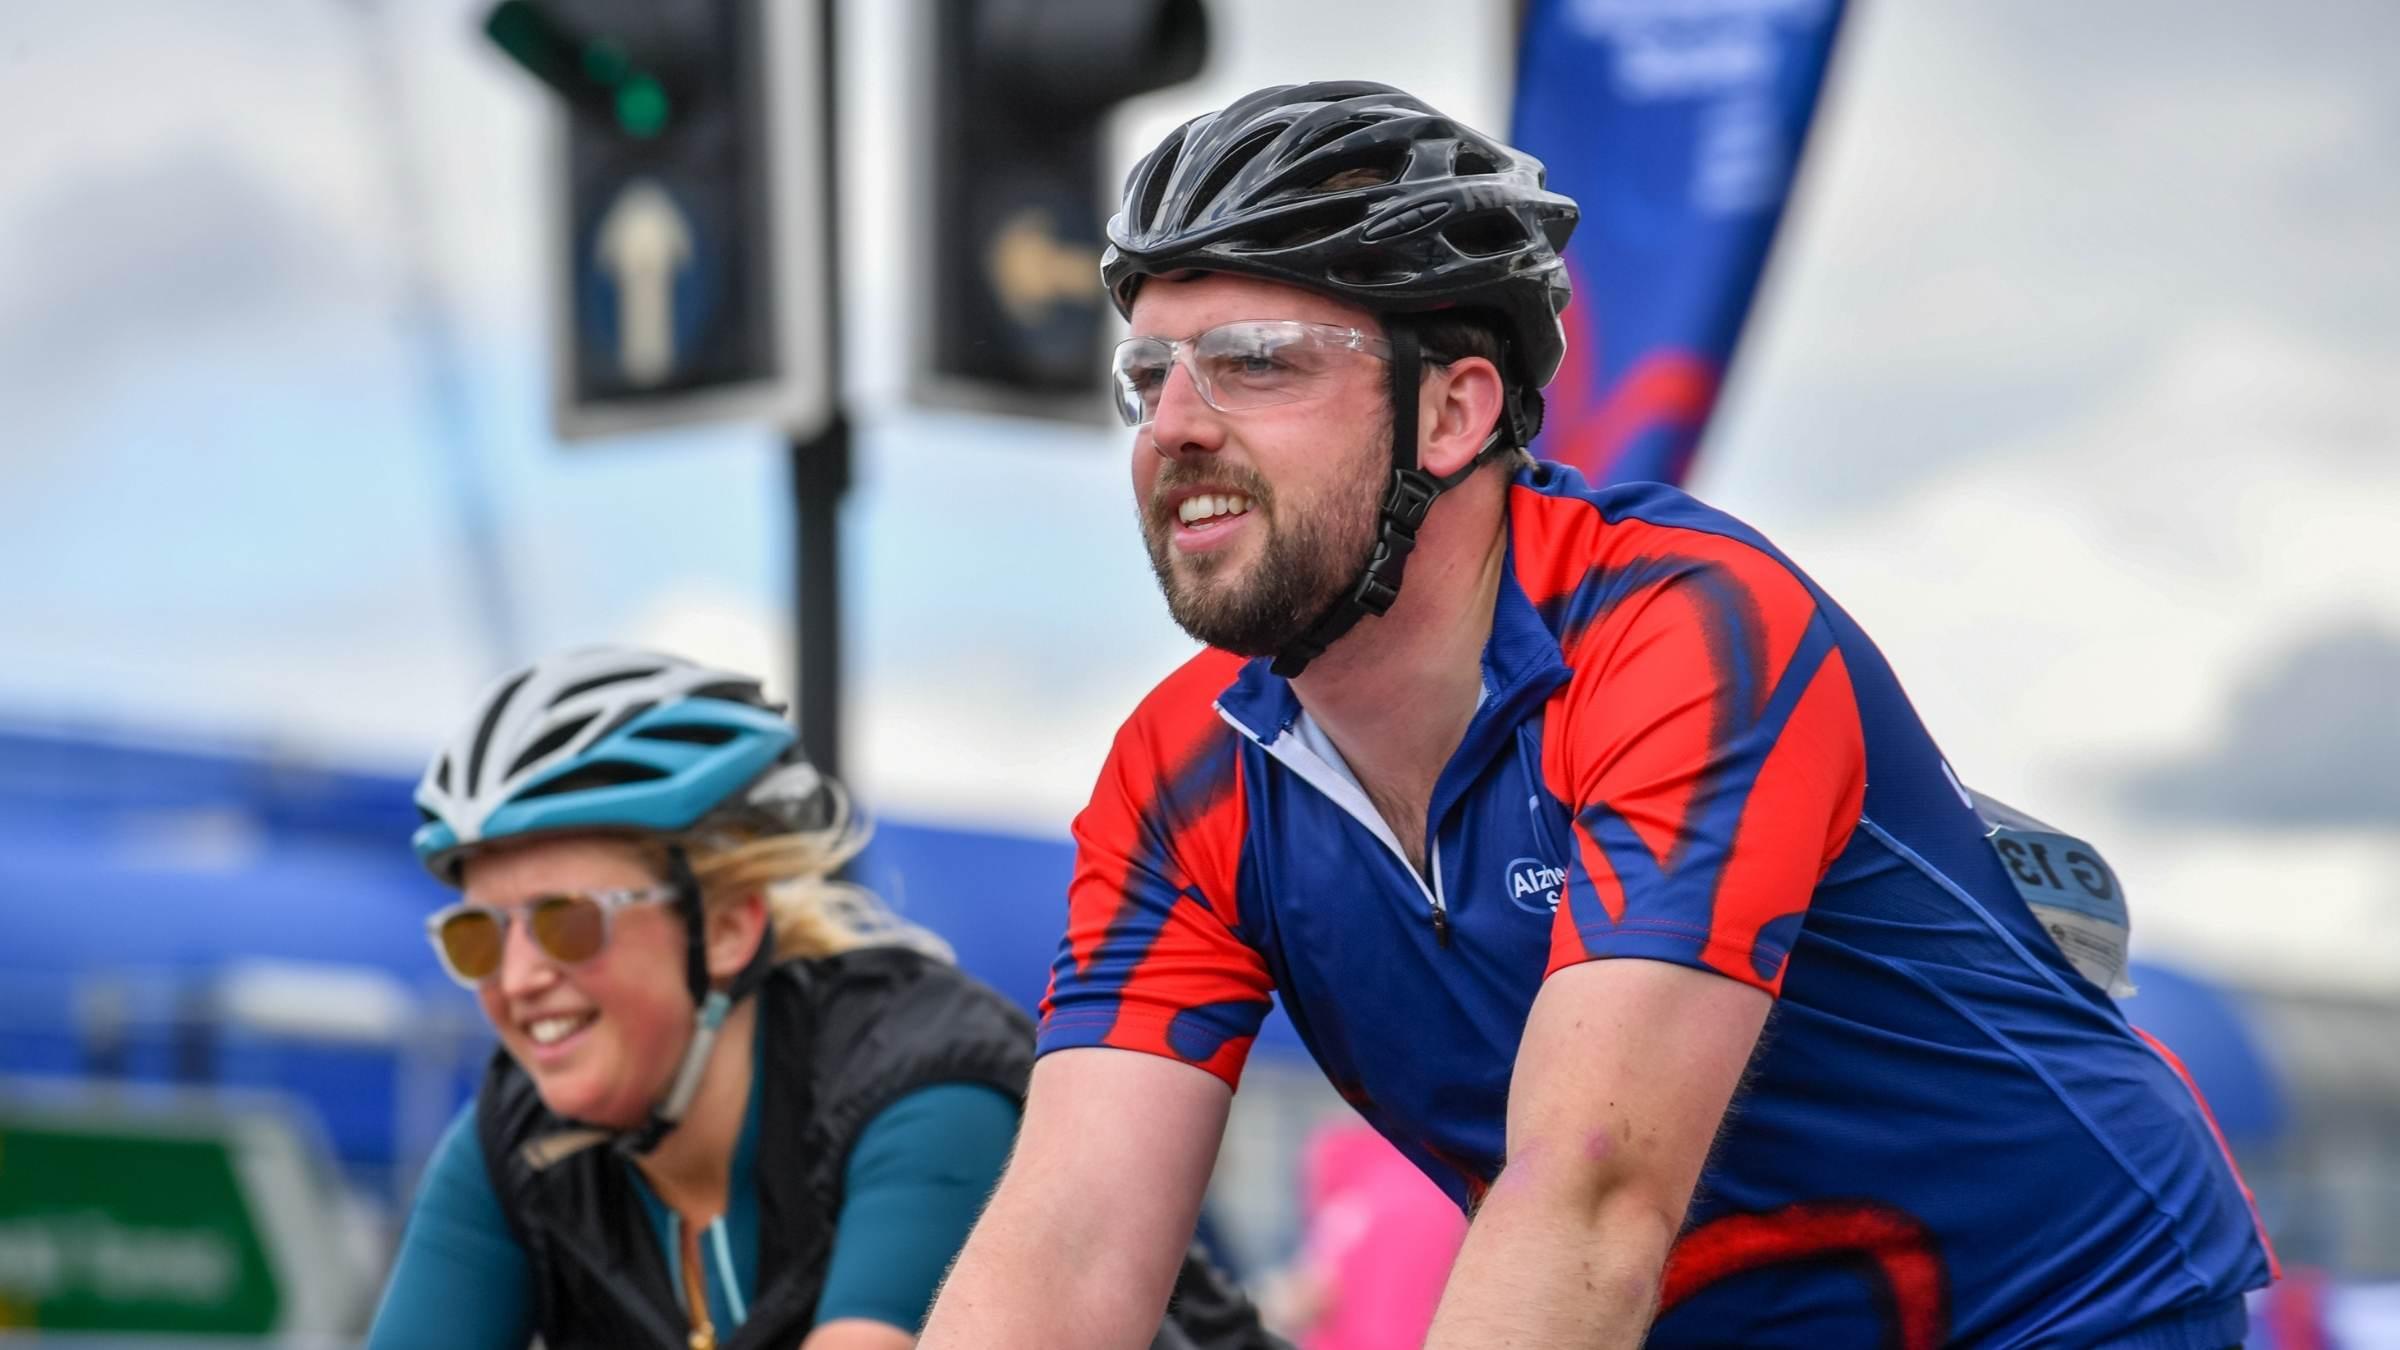 Man riding and smiling at Ride London 2022